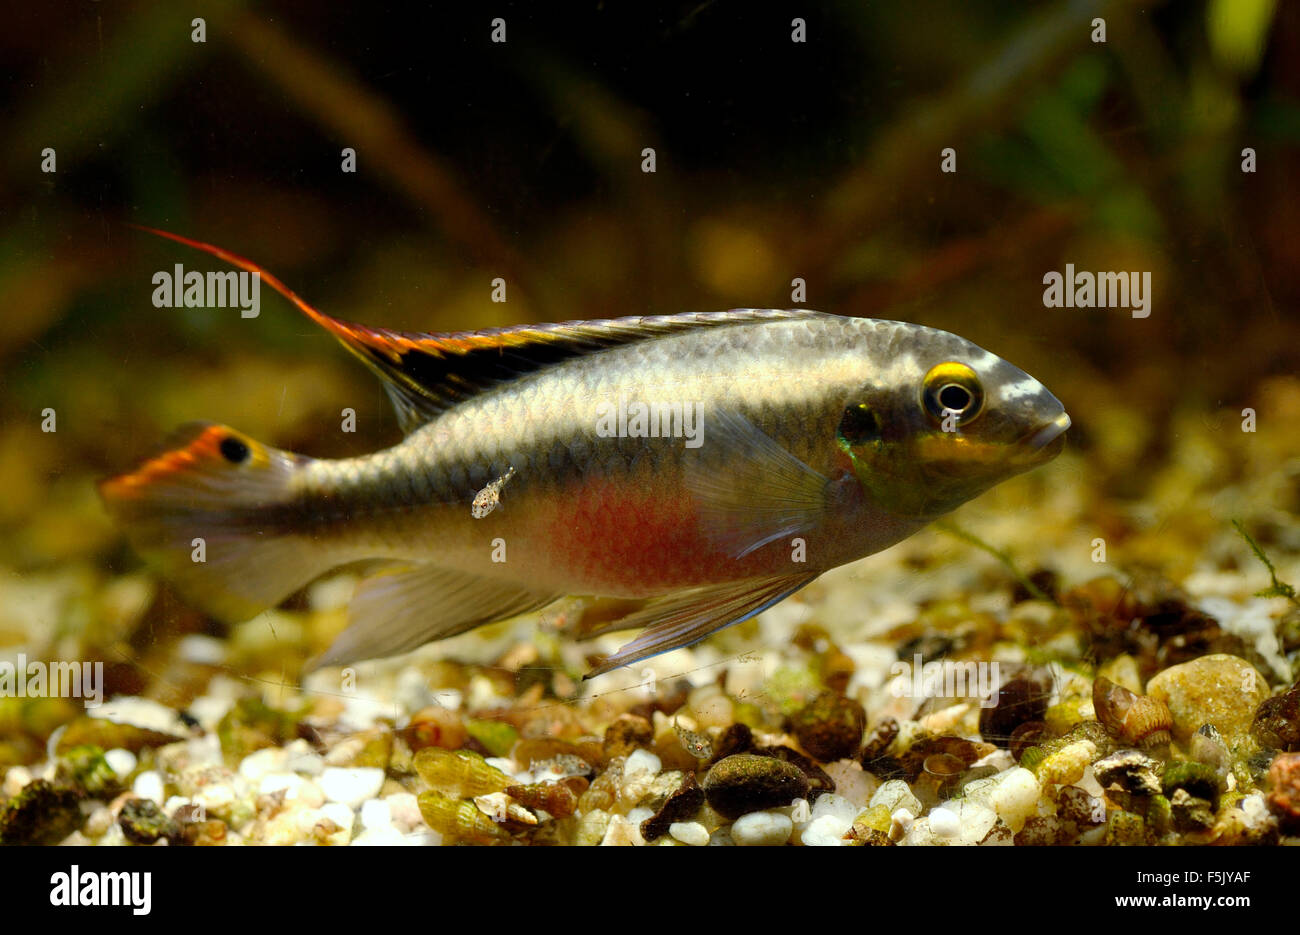 Kribensis cichlid (Pelvicachromis pulcher) with fingerling, captive Stock Photo